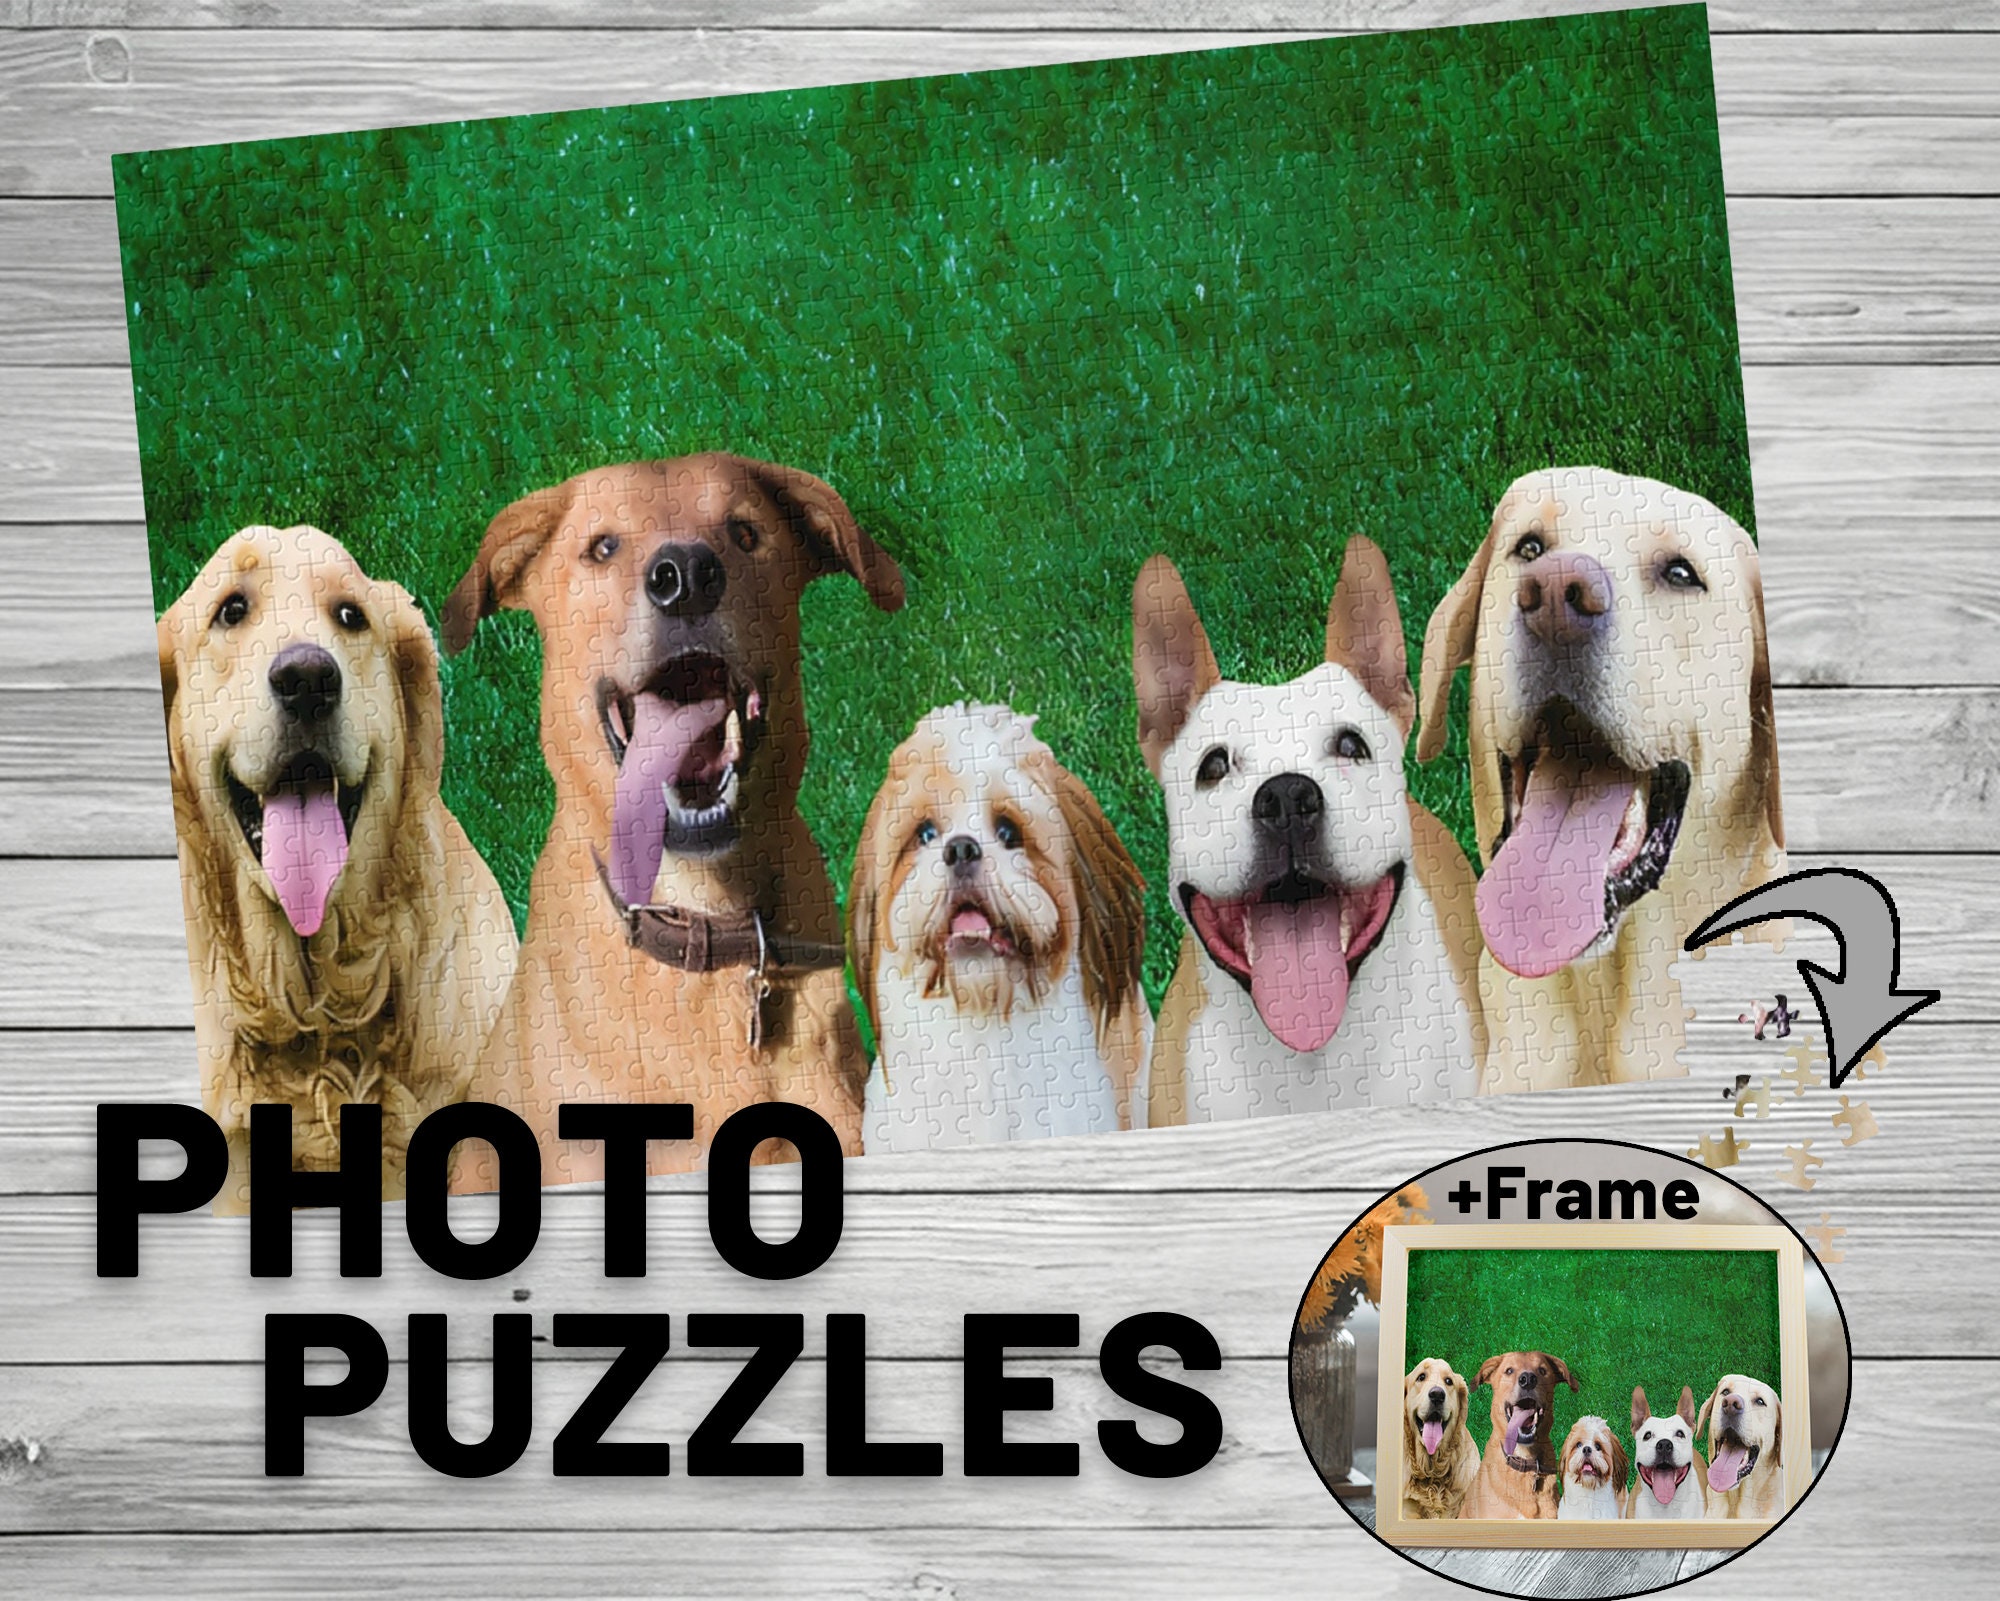 Puppy Portraits (1853pz) - 500 Piece Jigsaw Puzzle